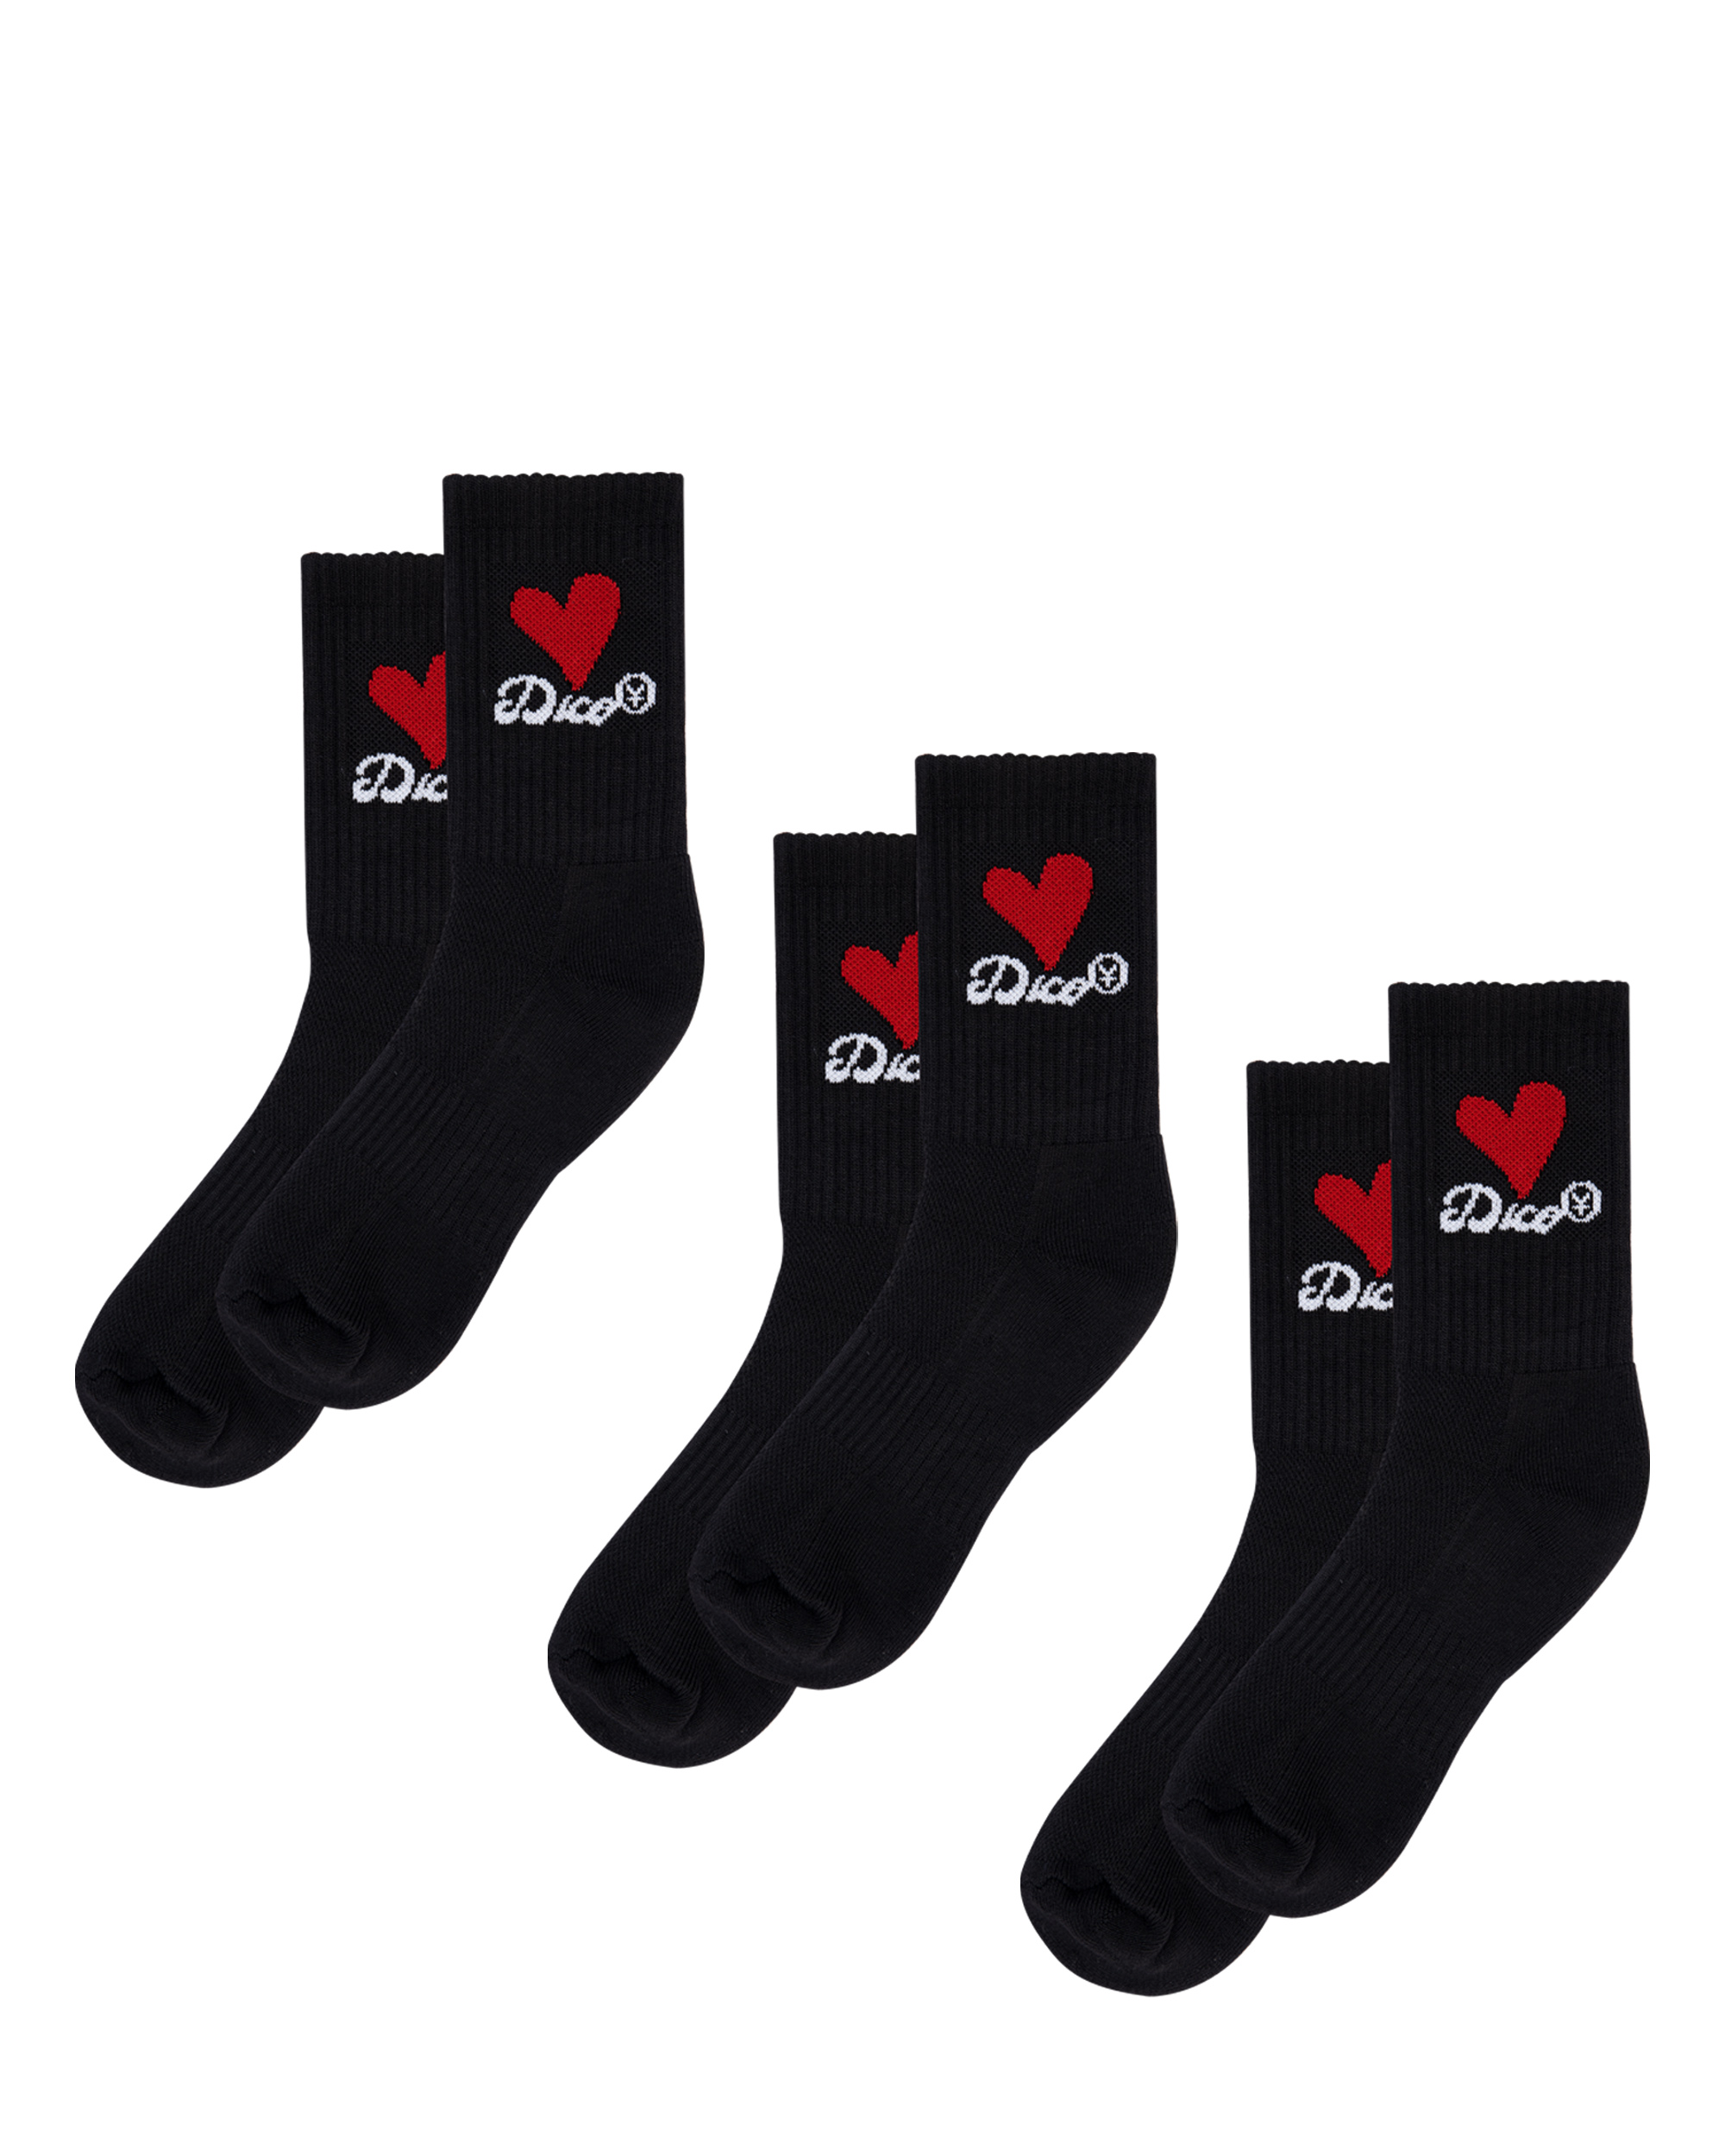 Dico Love Socks - Red/Black - Pack of 3